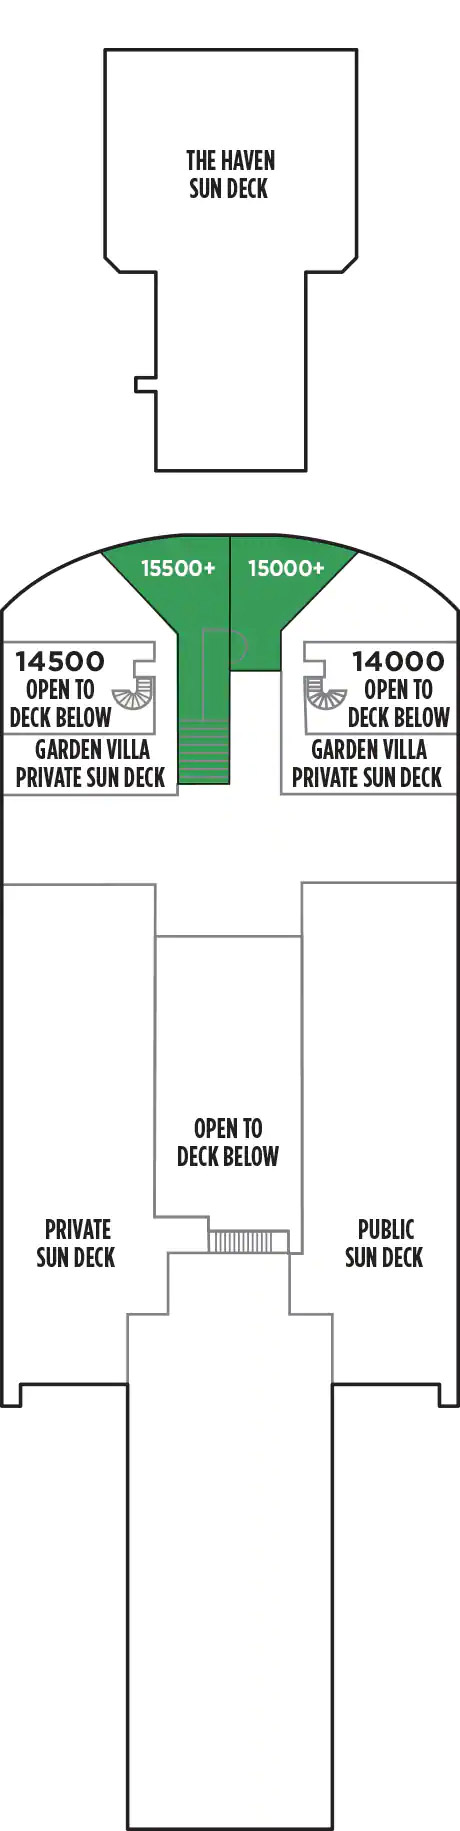 Deck 15